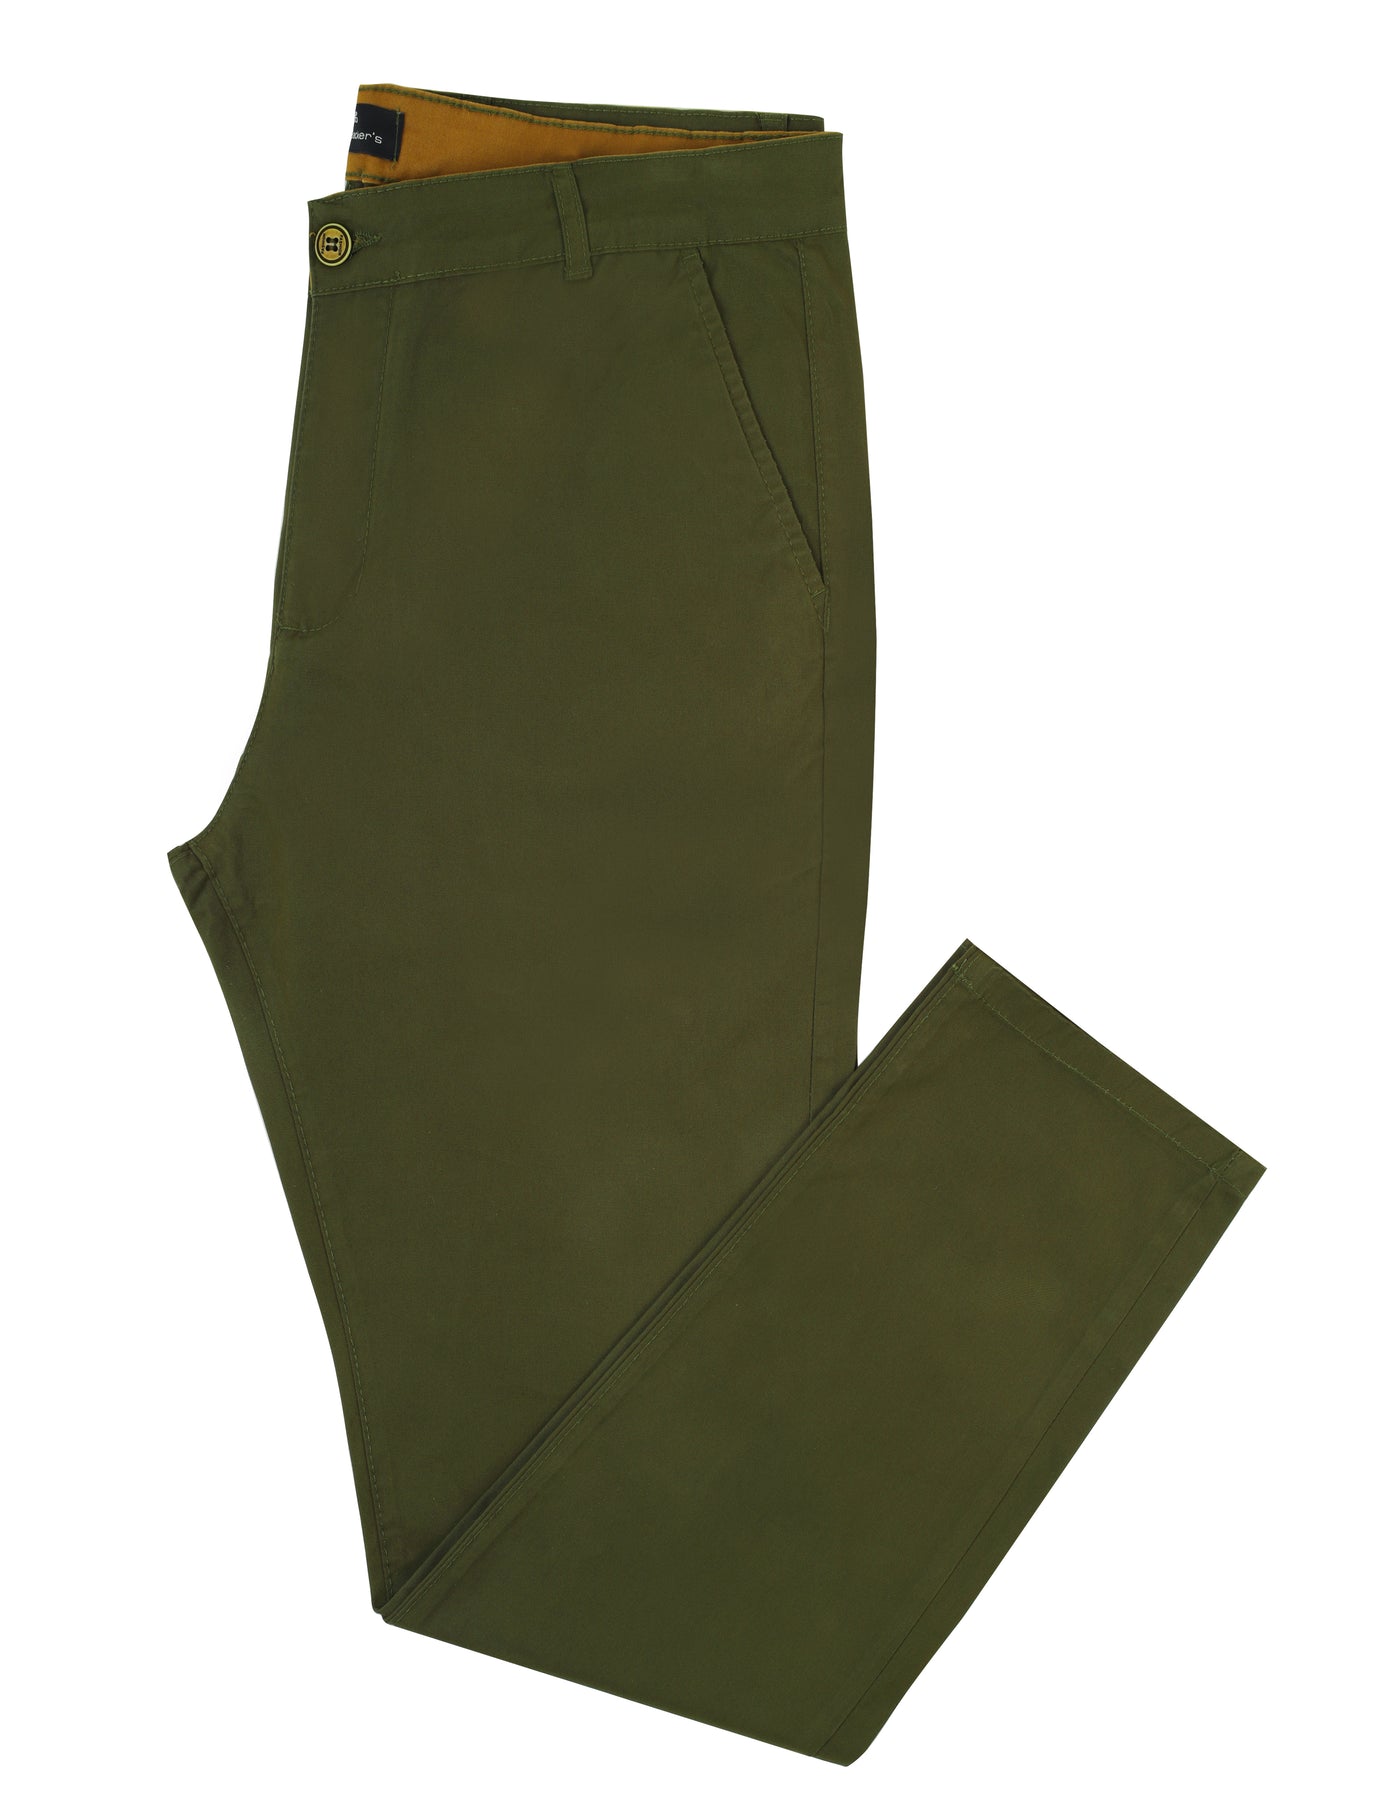 Chino Twill Cotton & Elastic Moss green Gabardine Pant